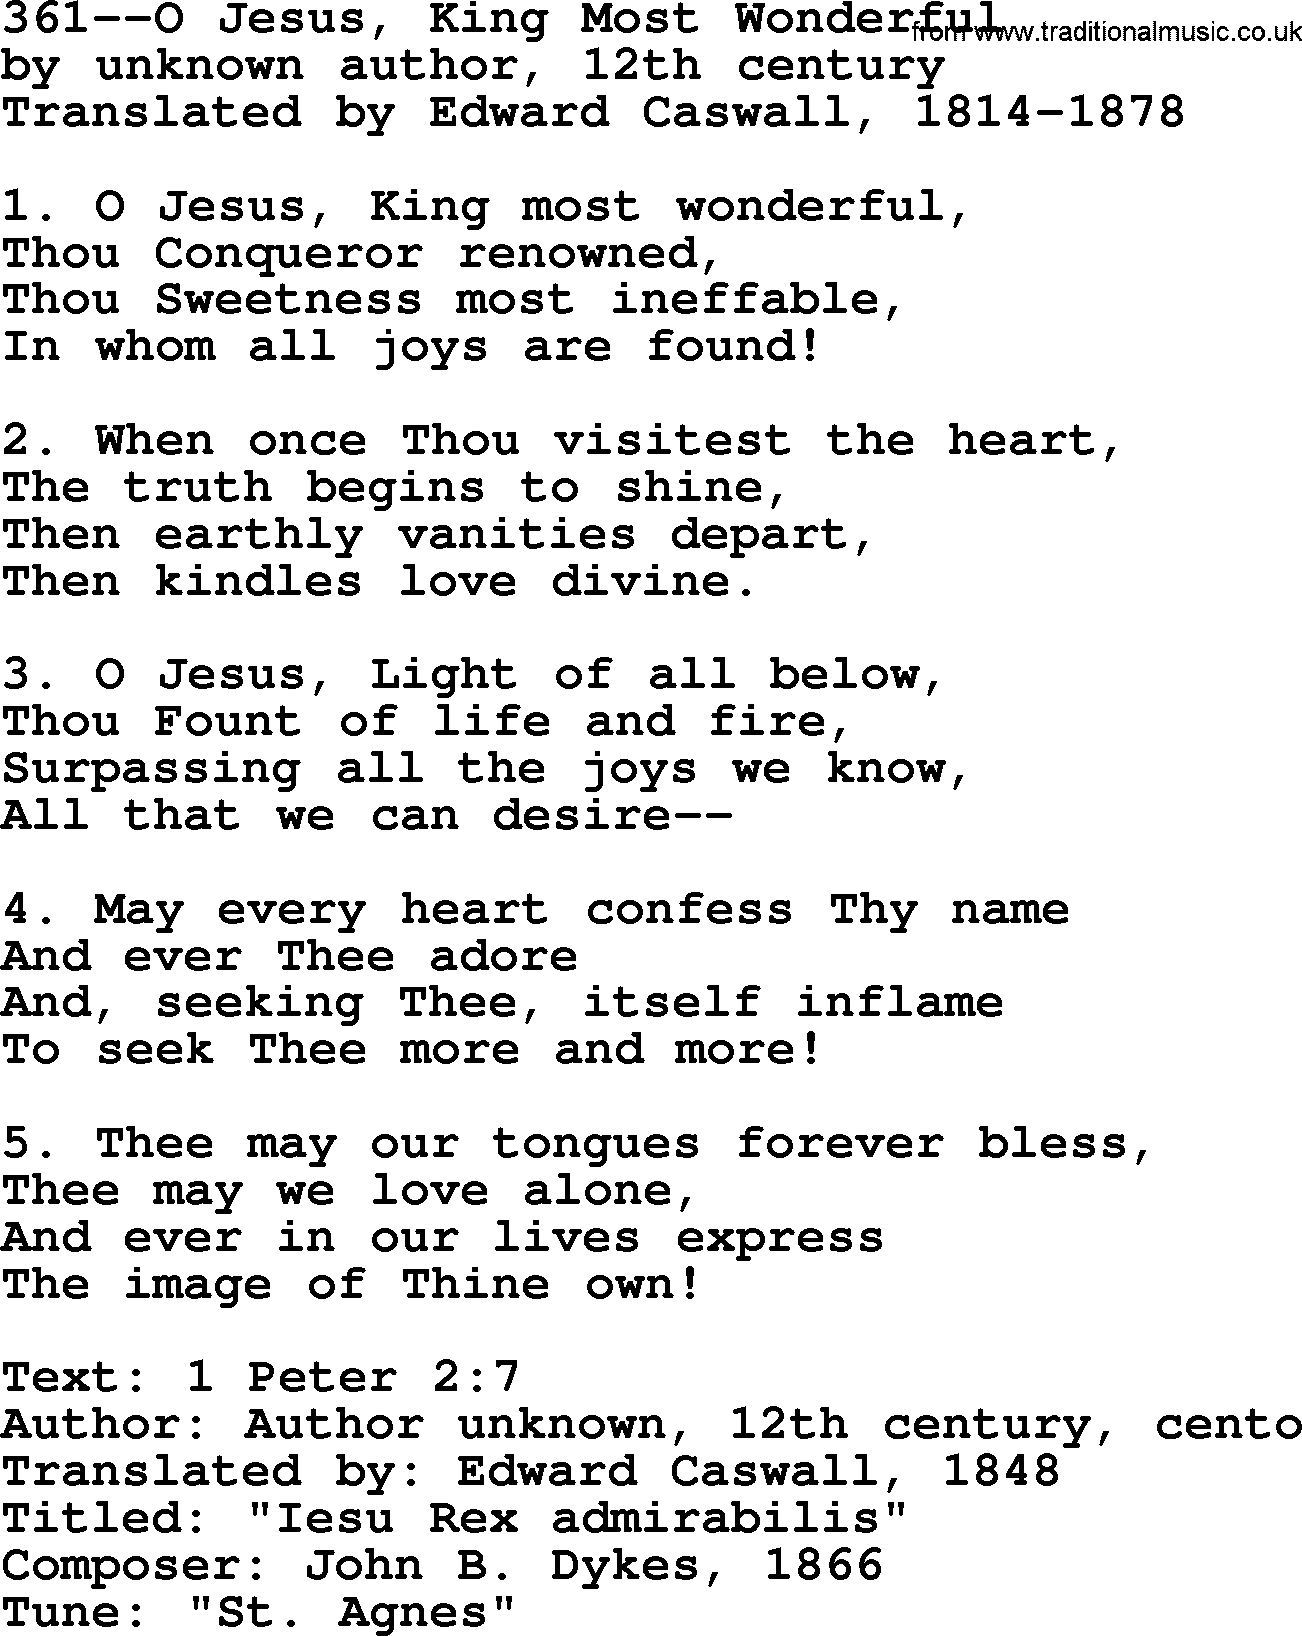 Lutheran Hymn: 361--O Jesus, King Most Wonderful.txt lyrics with PDF